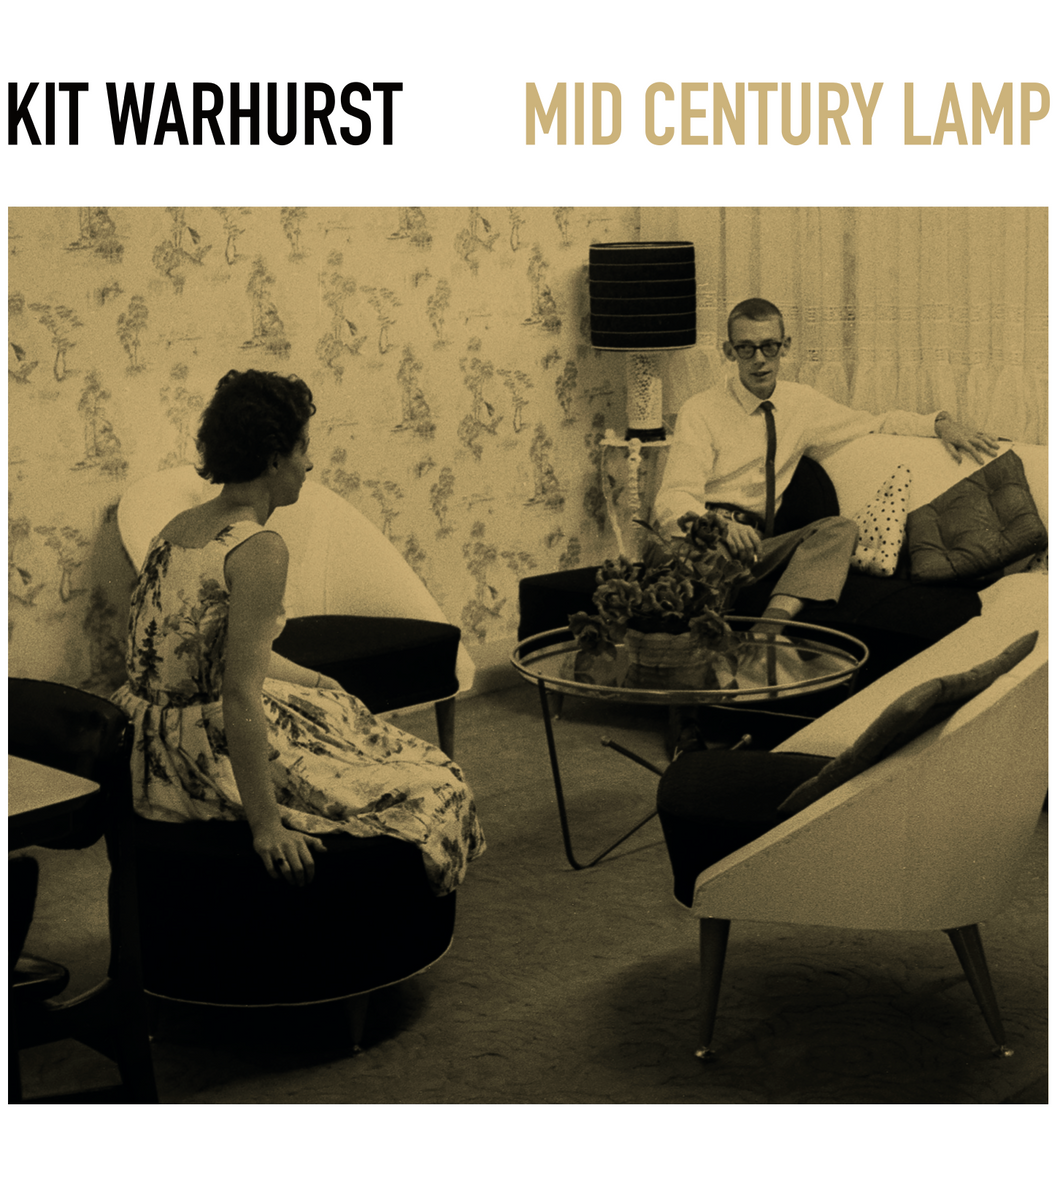 Mid Century Lamp | Black Dolphin Motel - Double A Side 7 inch Vinyl